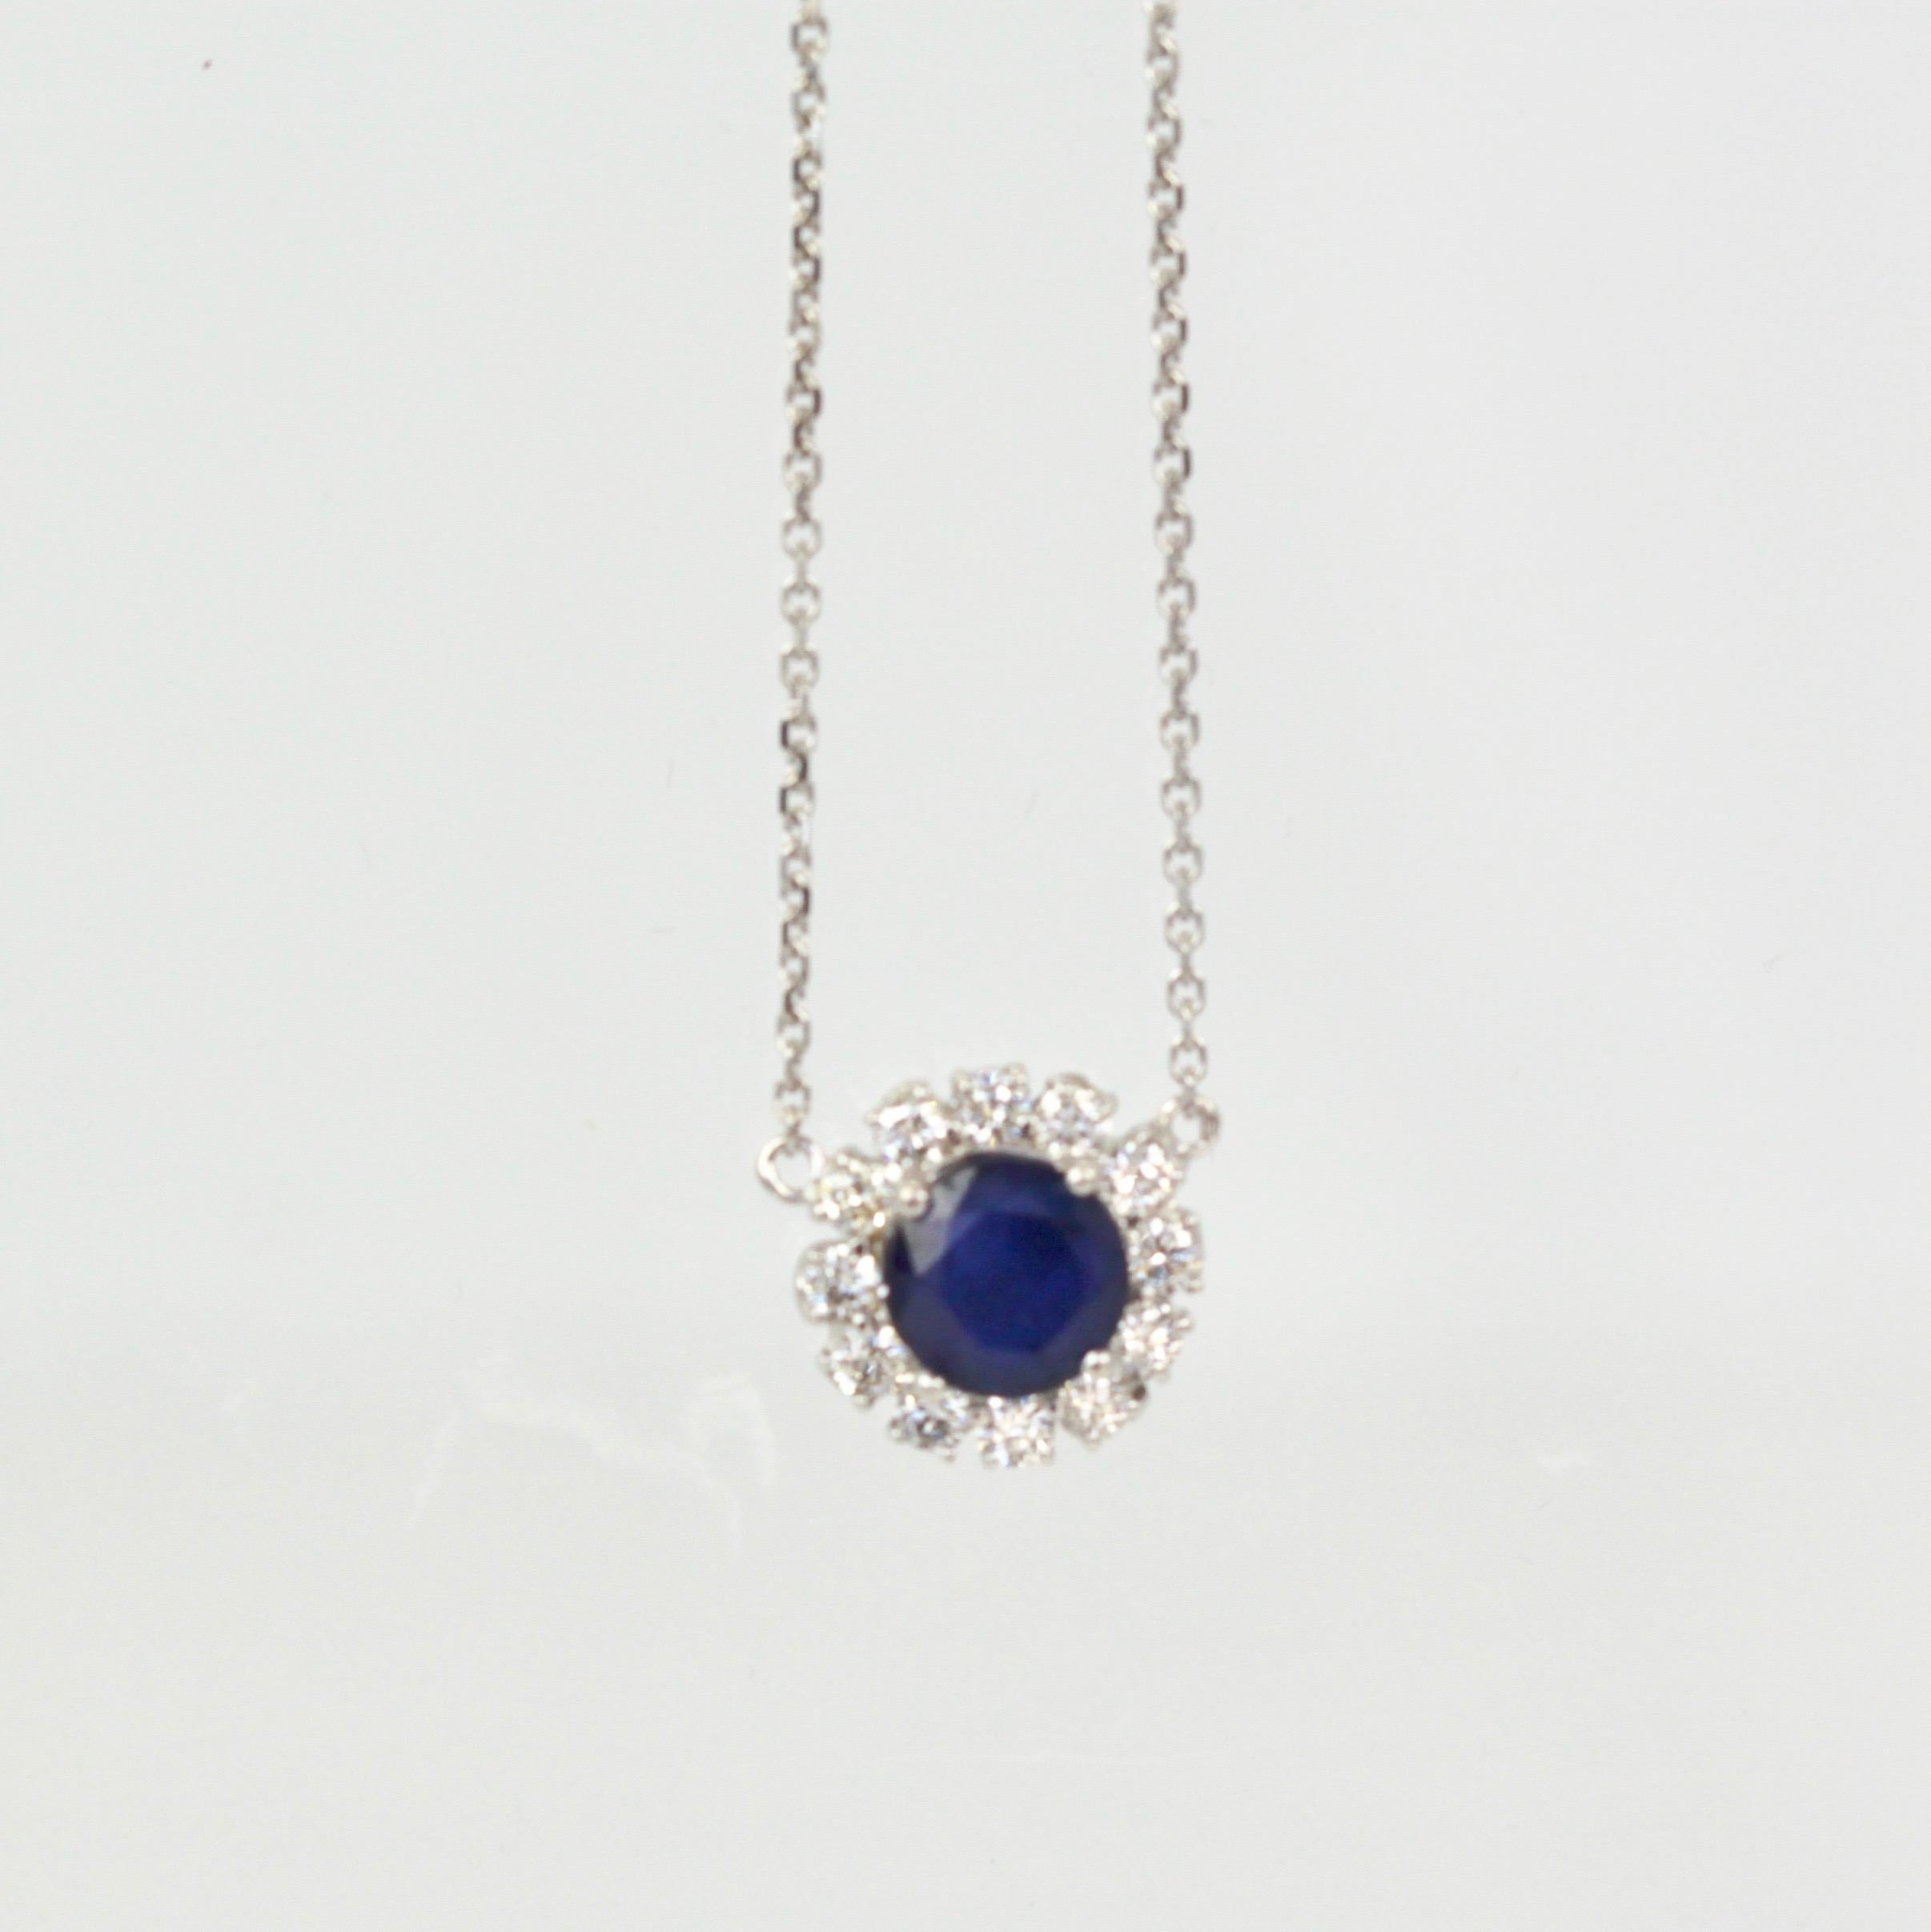 Aesthetic Movement Blue Sapphire Pendant Necklace with Diamond Surround